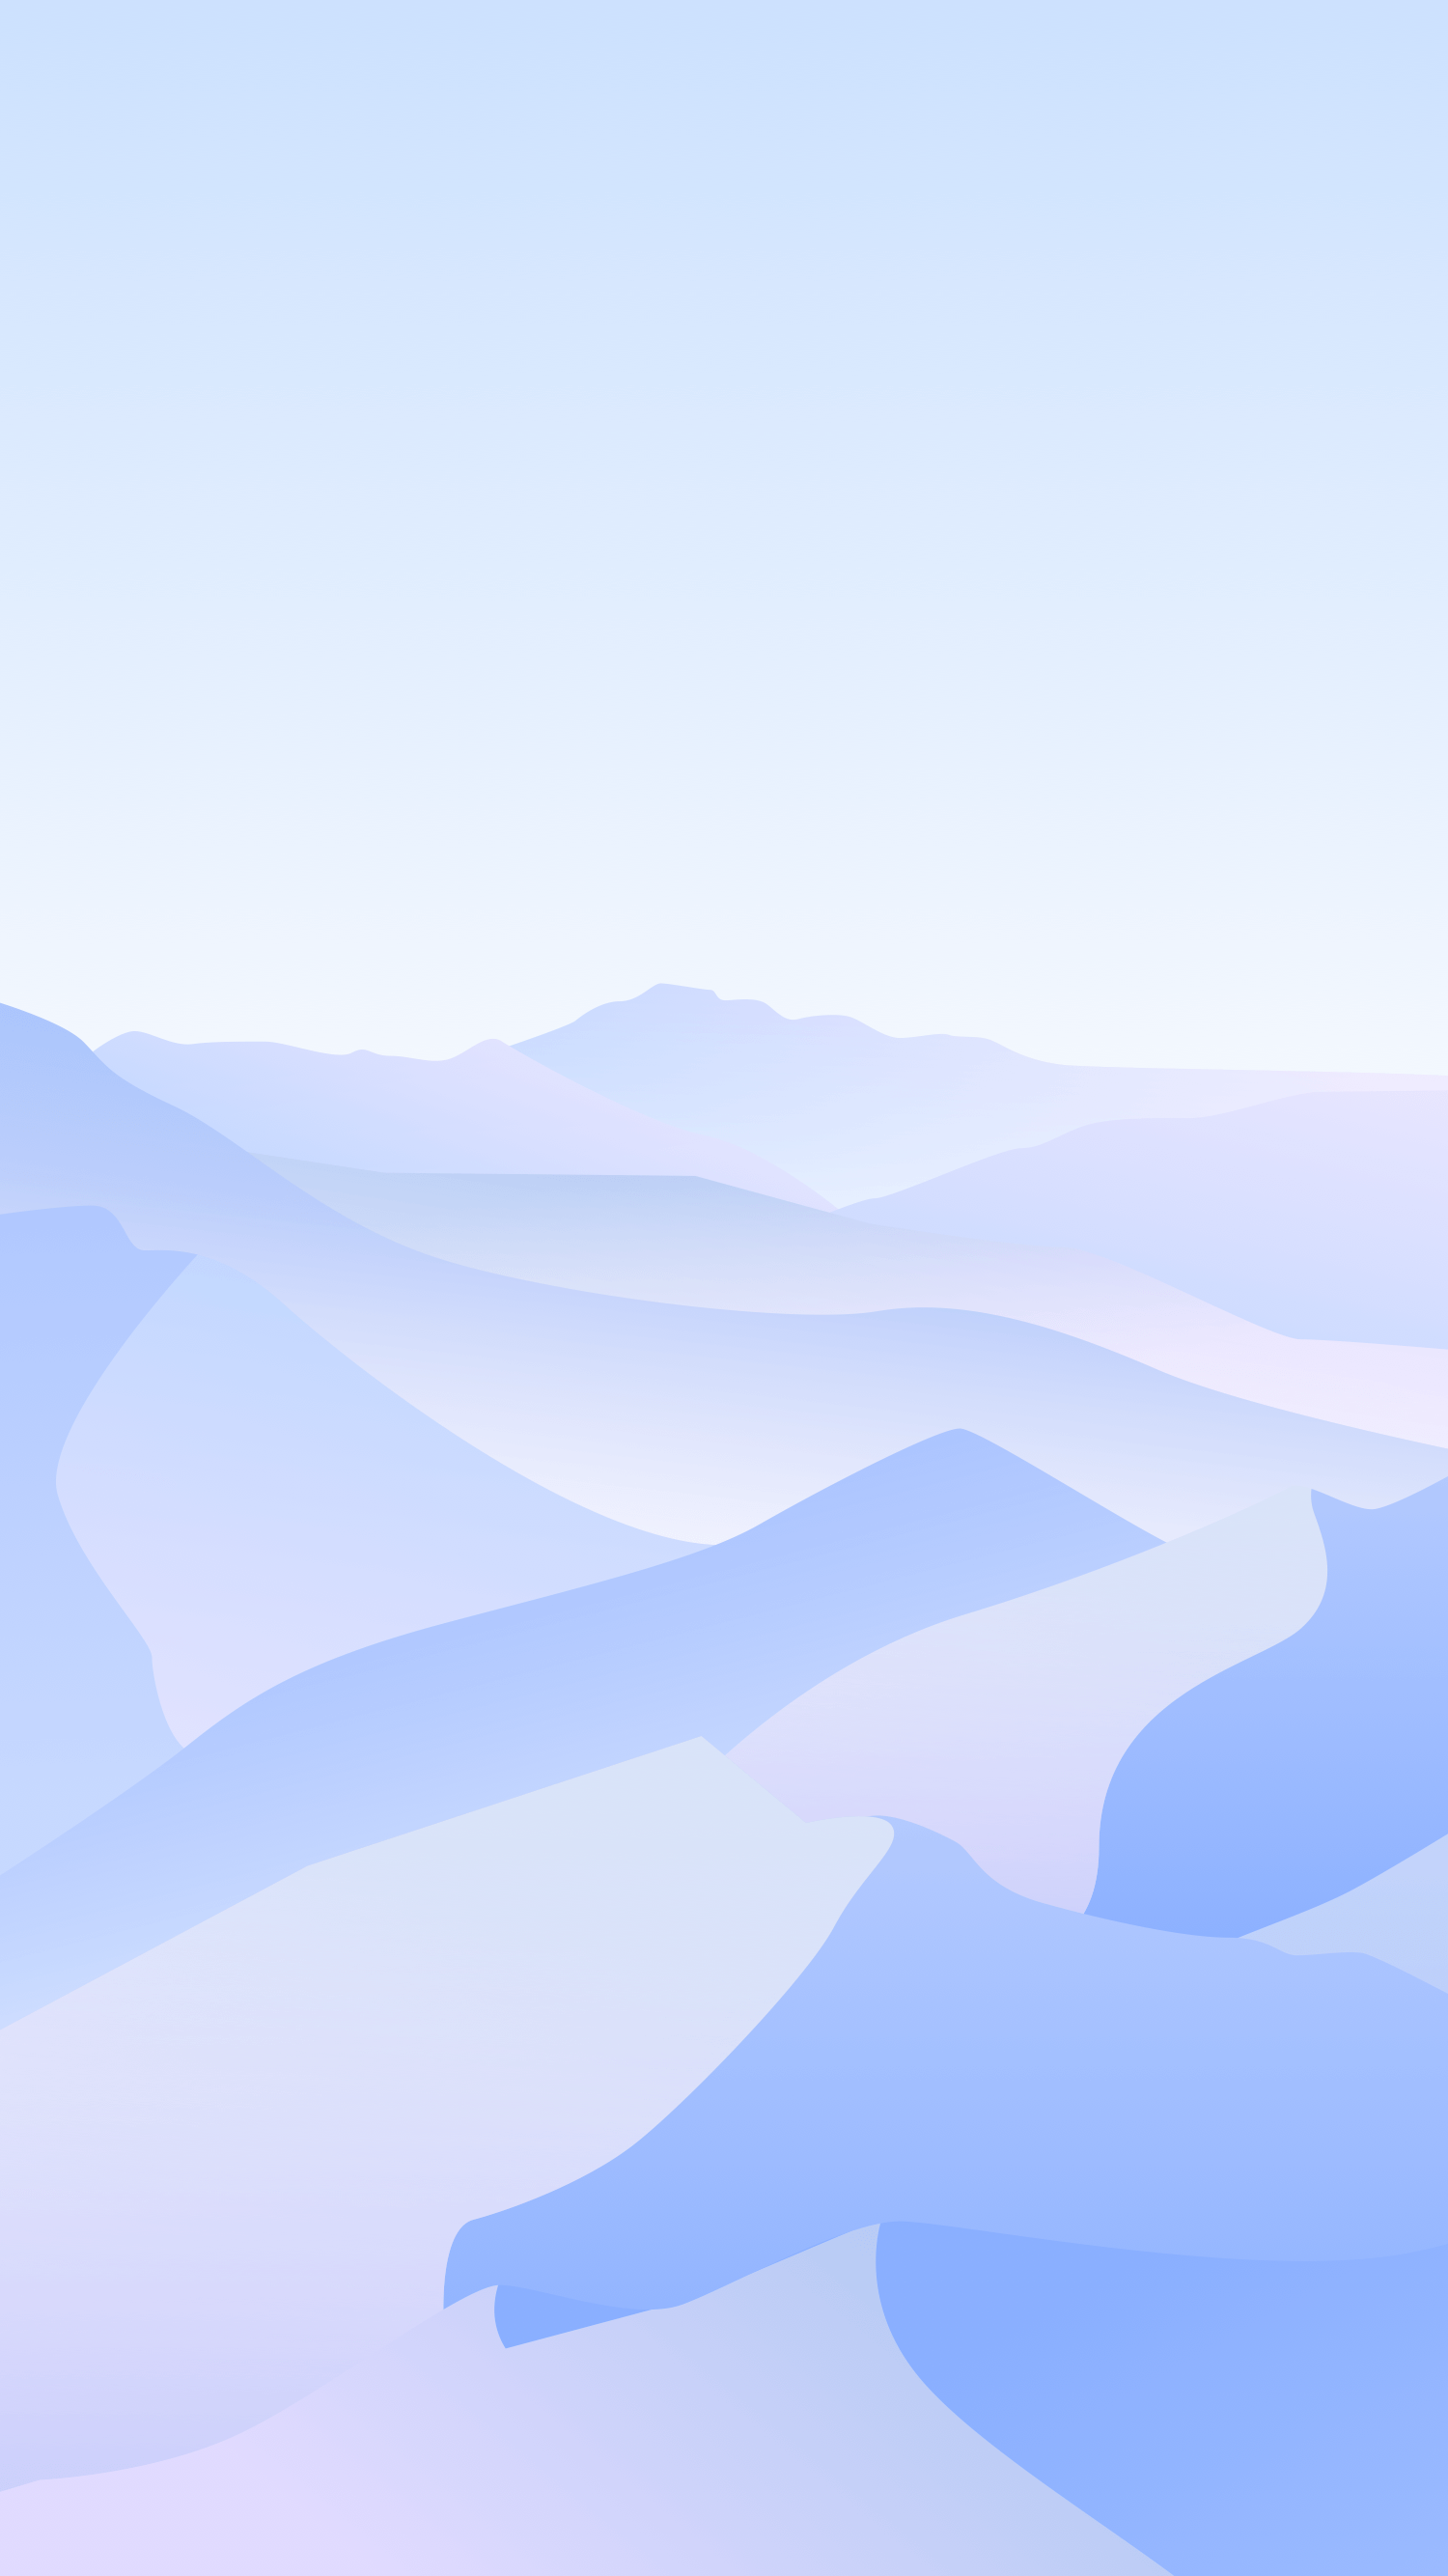 Minimalist ice landscape wallpaper